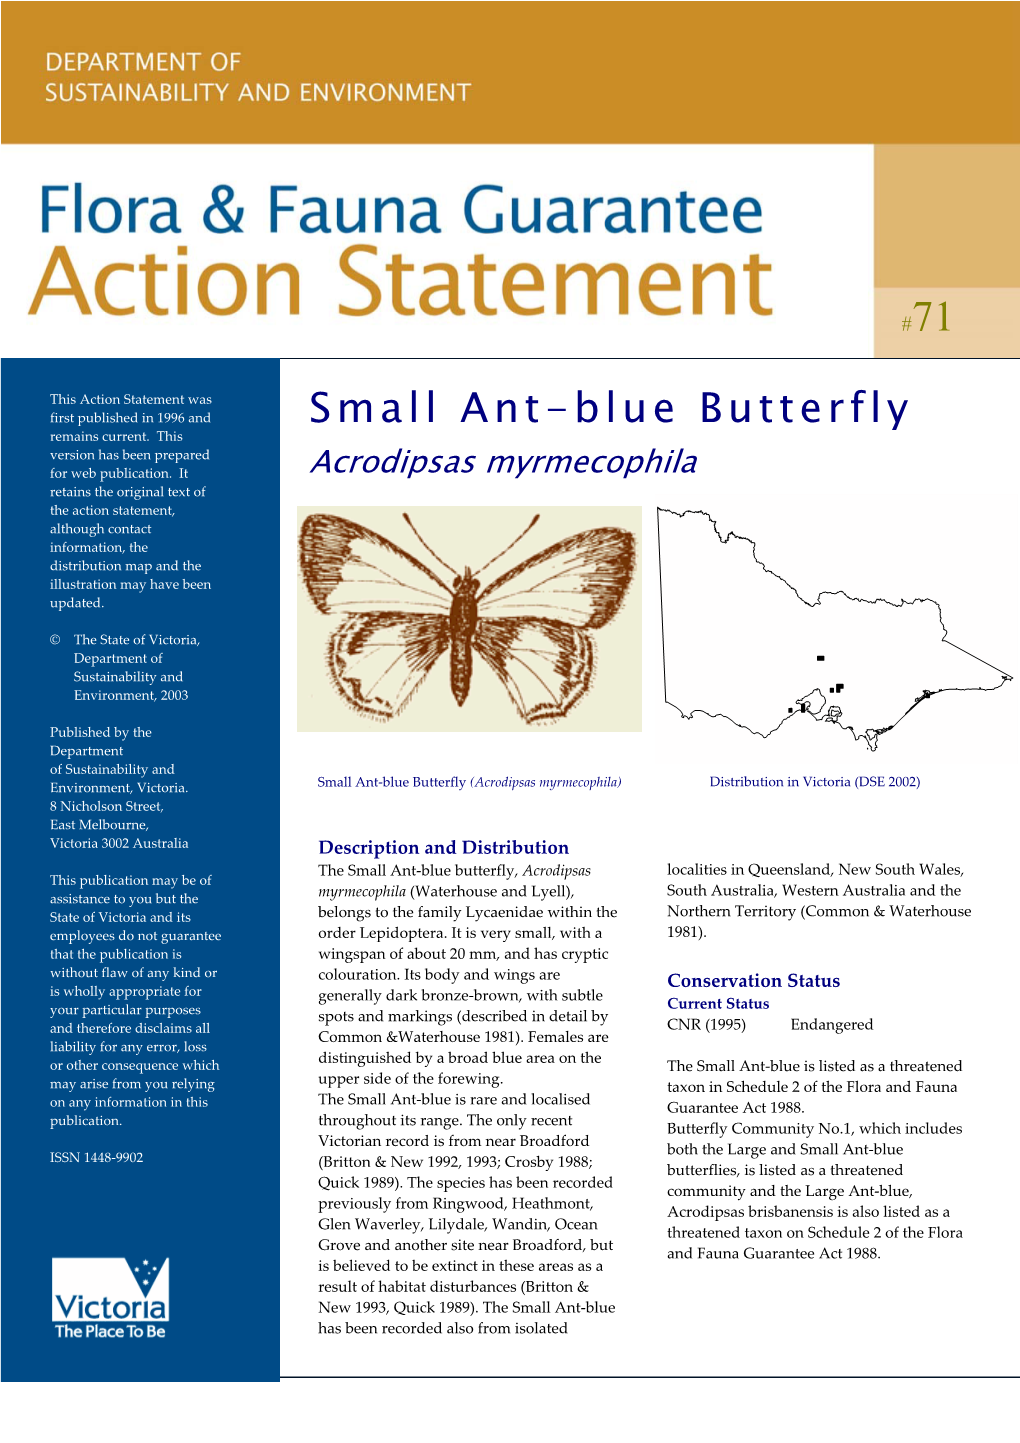 Small Ant-Blue Butterfly (Acrodipsas Myrmecophila)